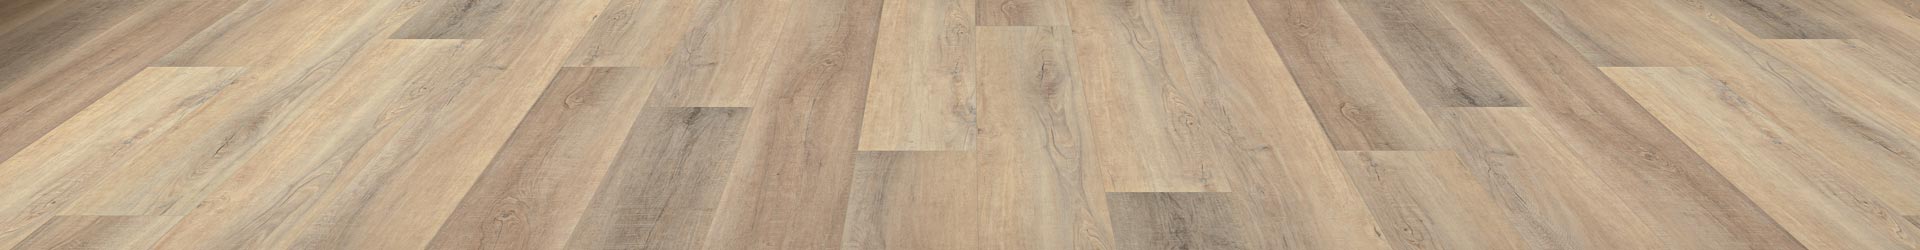 Coretec Pro Plus Vinyl Plank Flooring, Does Coretec Flooring Have Formaldehyde